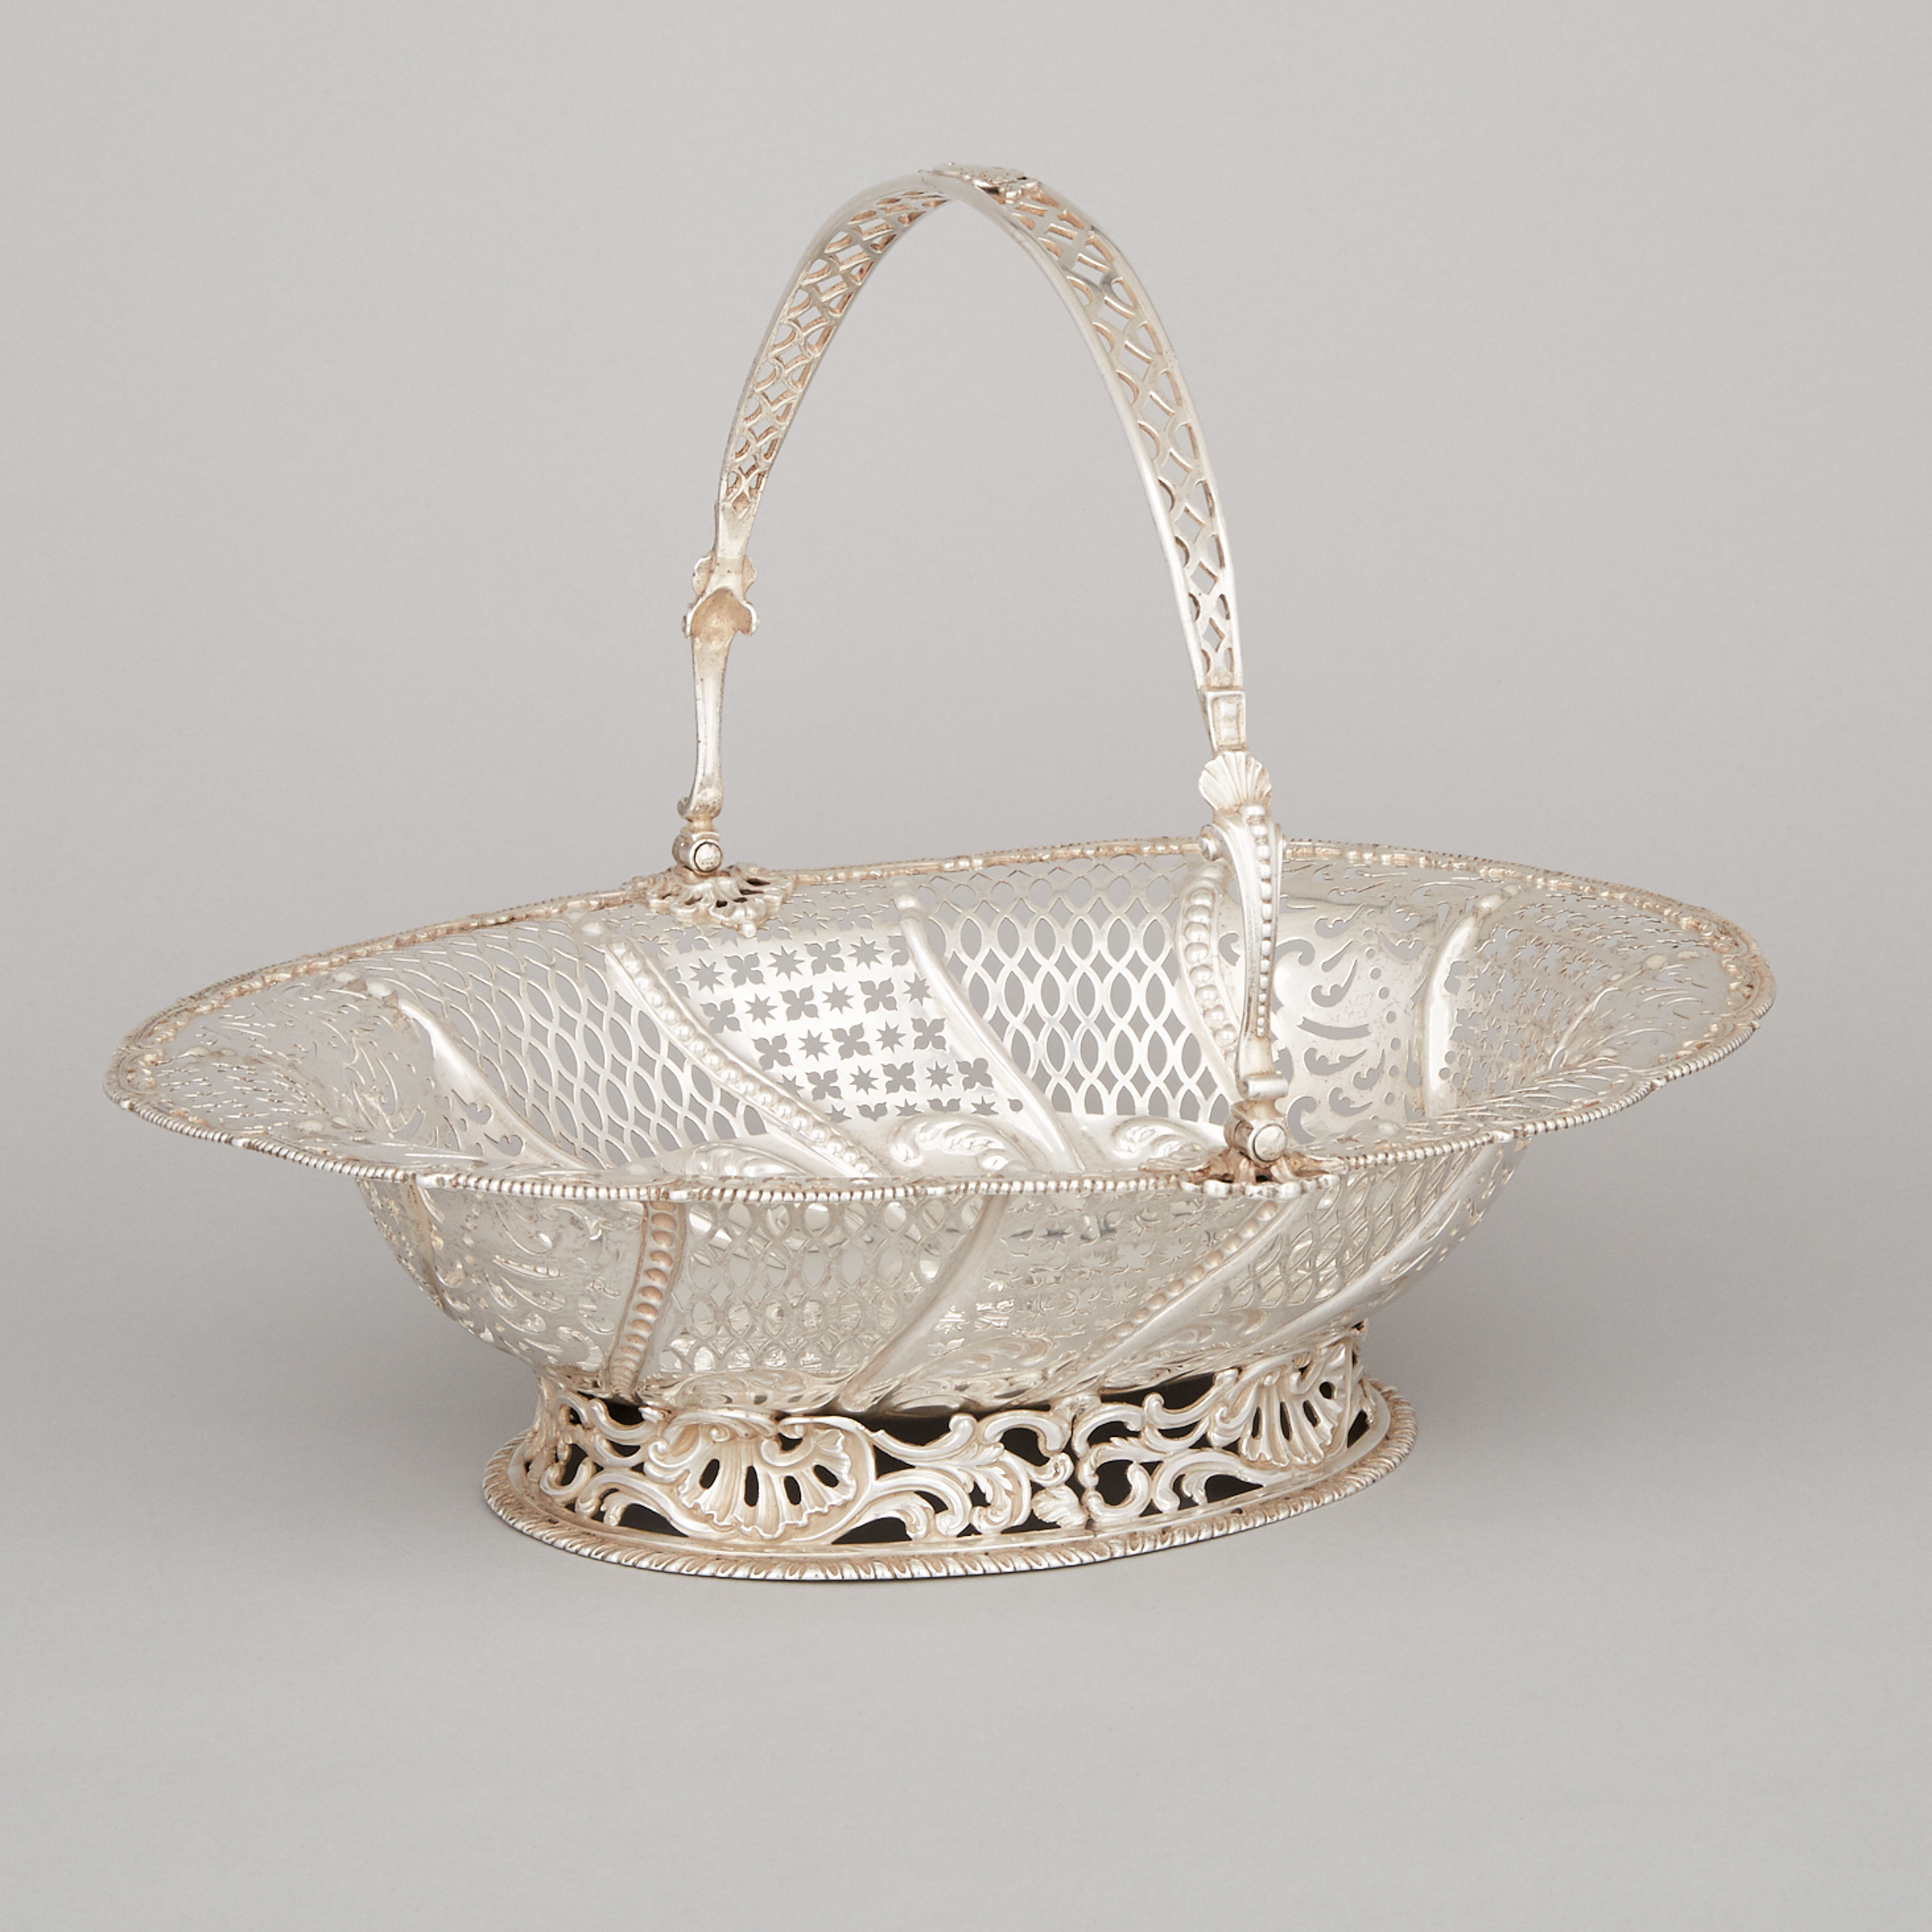 George III Silver Oval Cake Basket, London, 1767